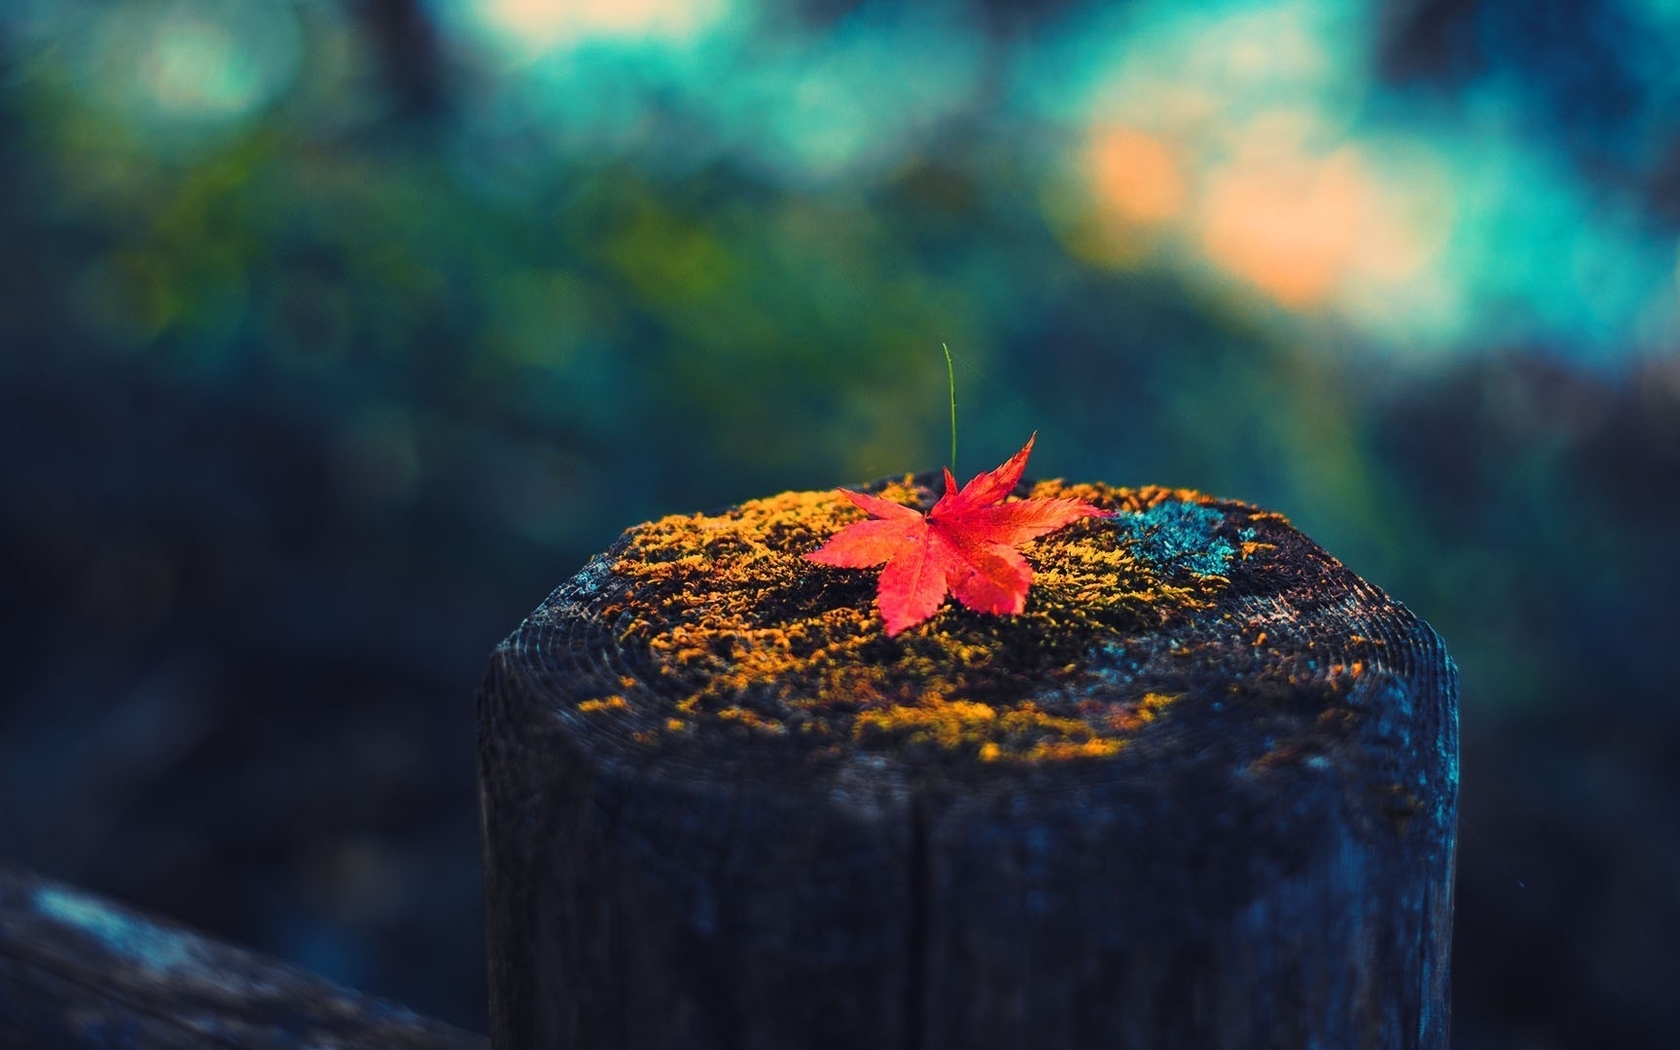 Image: Leaf, tree stump, autumn, bokeh, blur